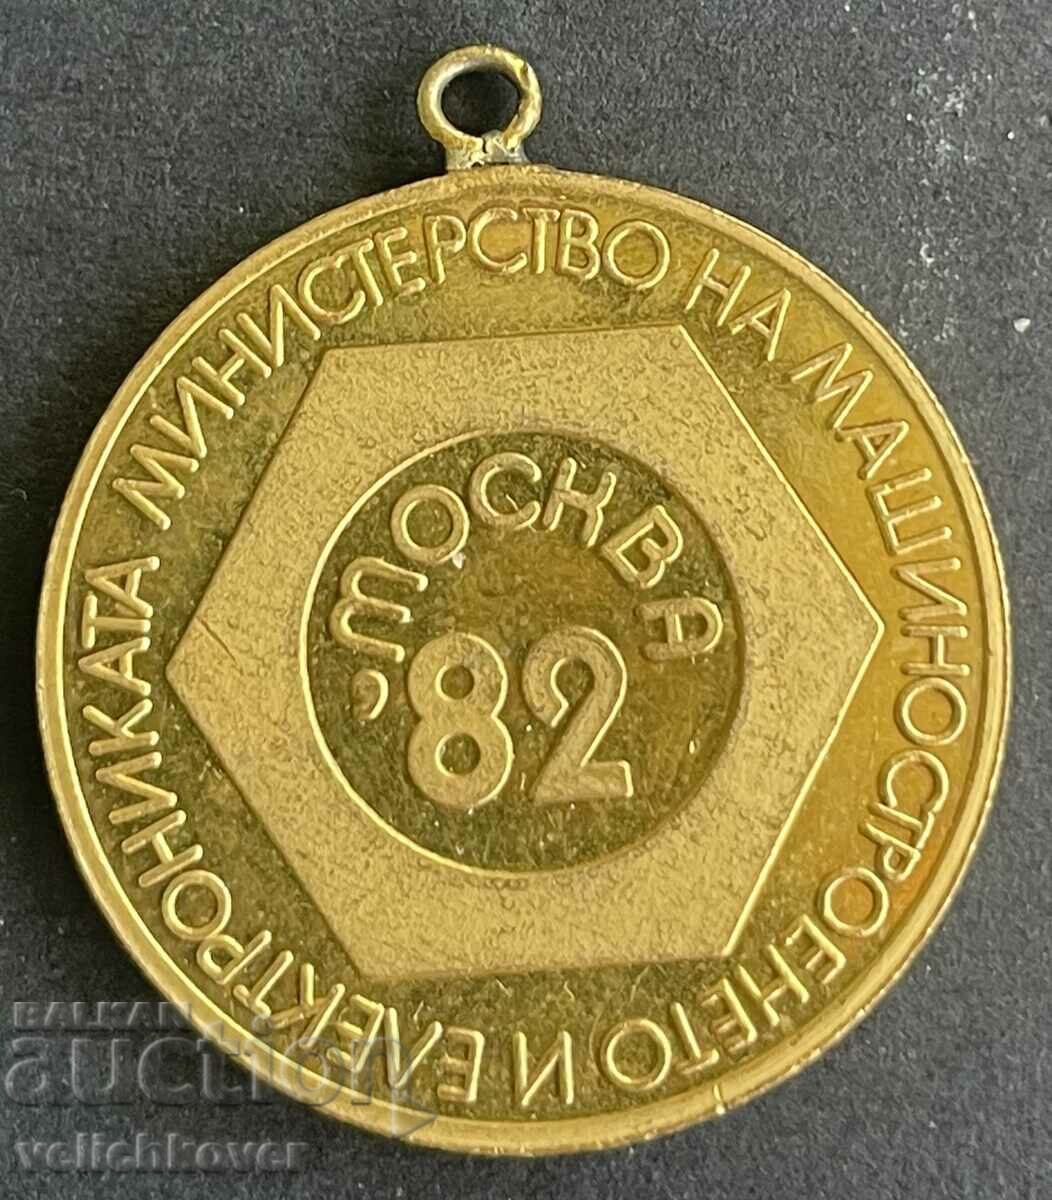 36025 Bulgaria medalie Expoziția BNR în URSS Inginerie Mecanică 1982.